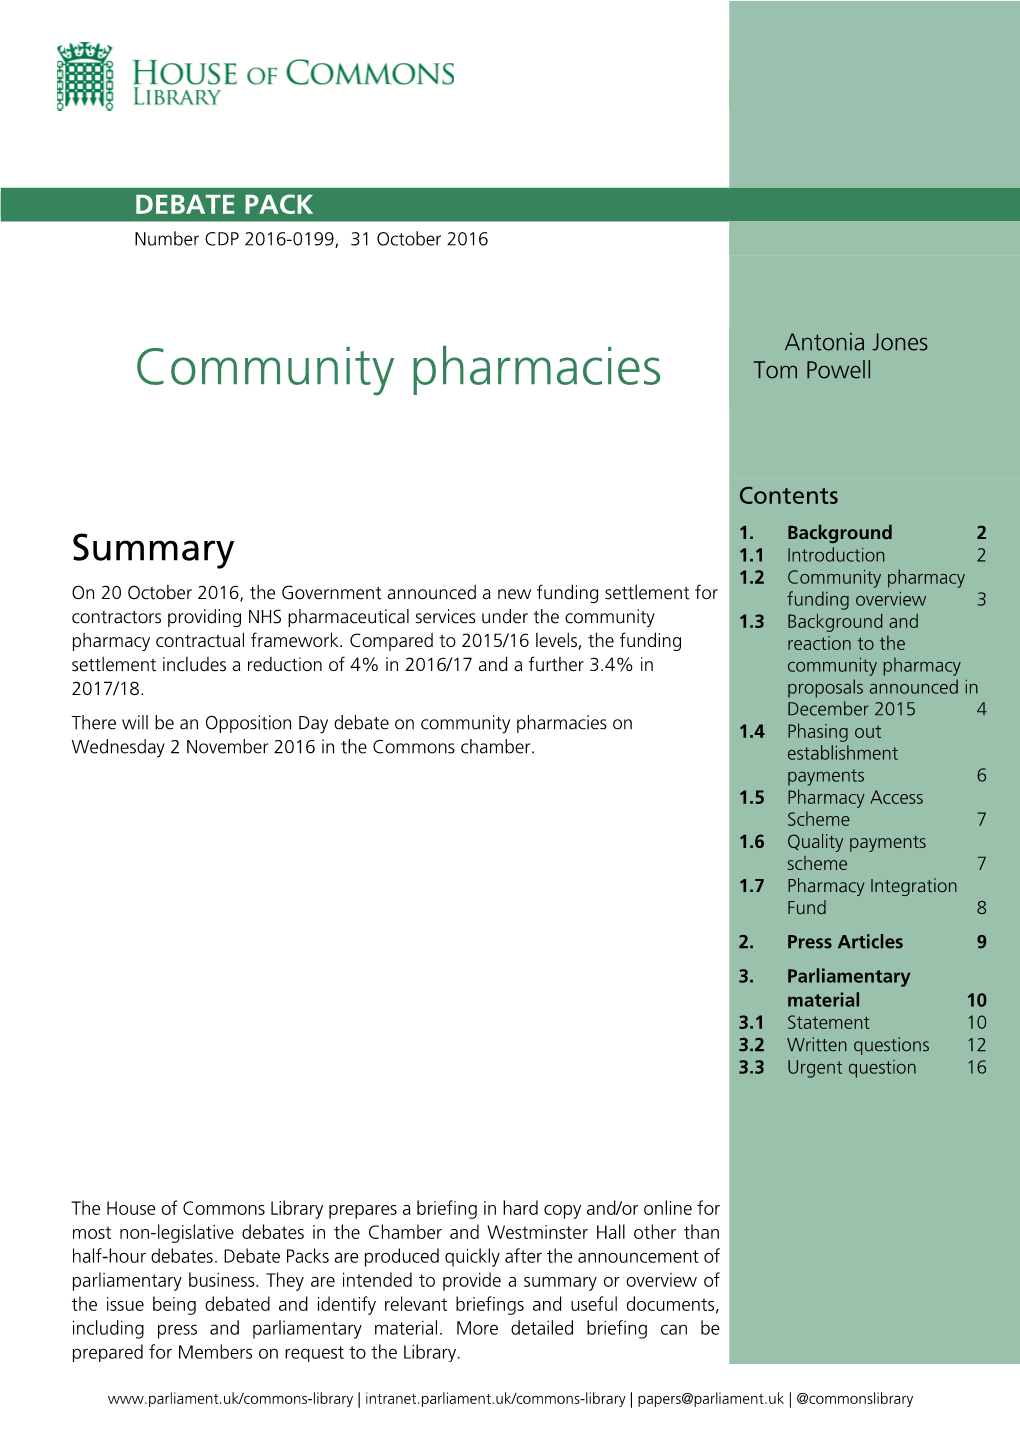 Community Pharmacies